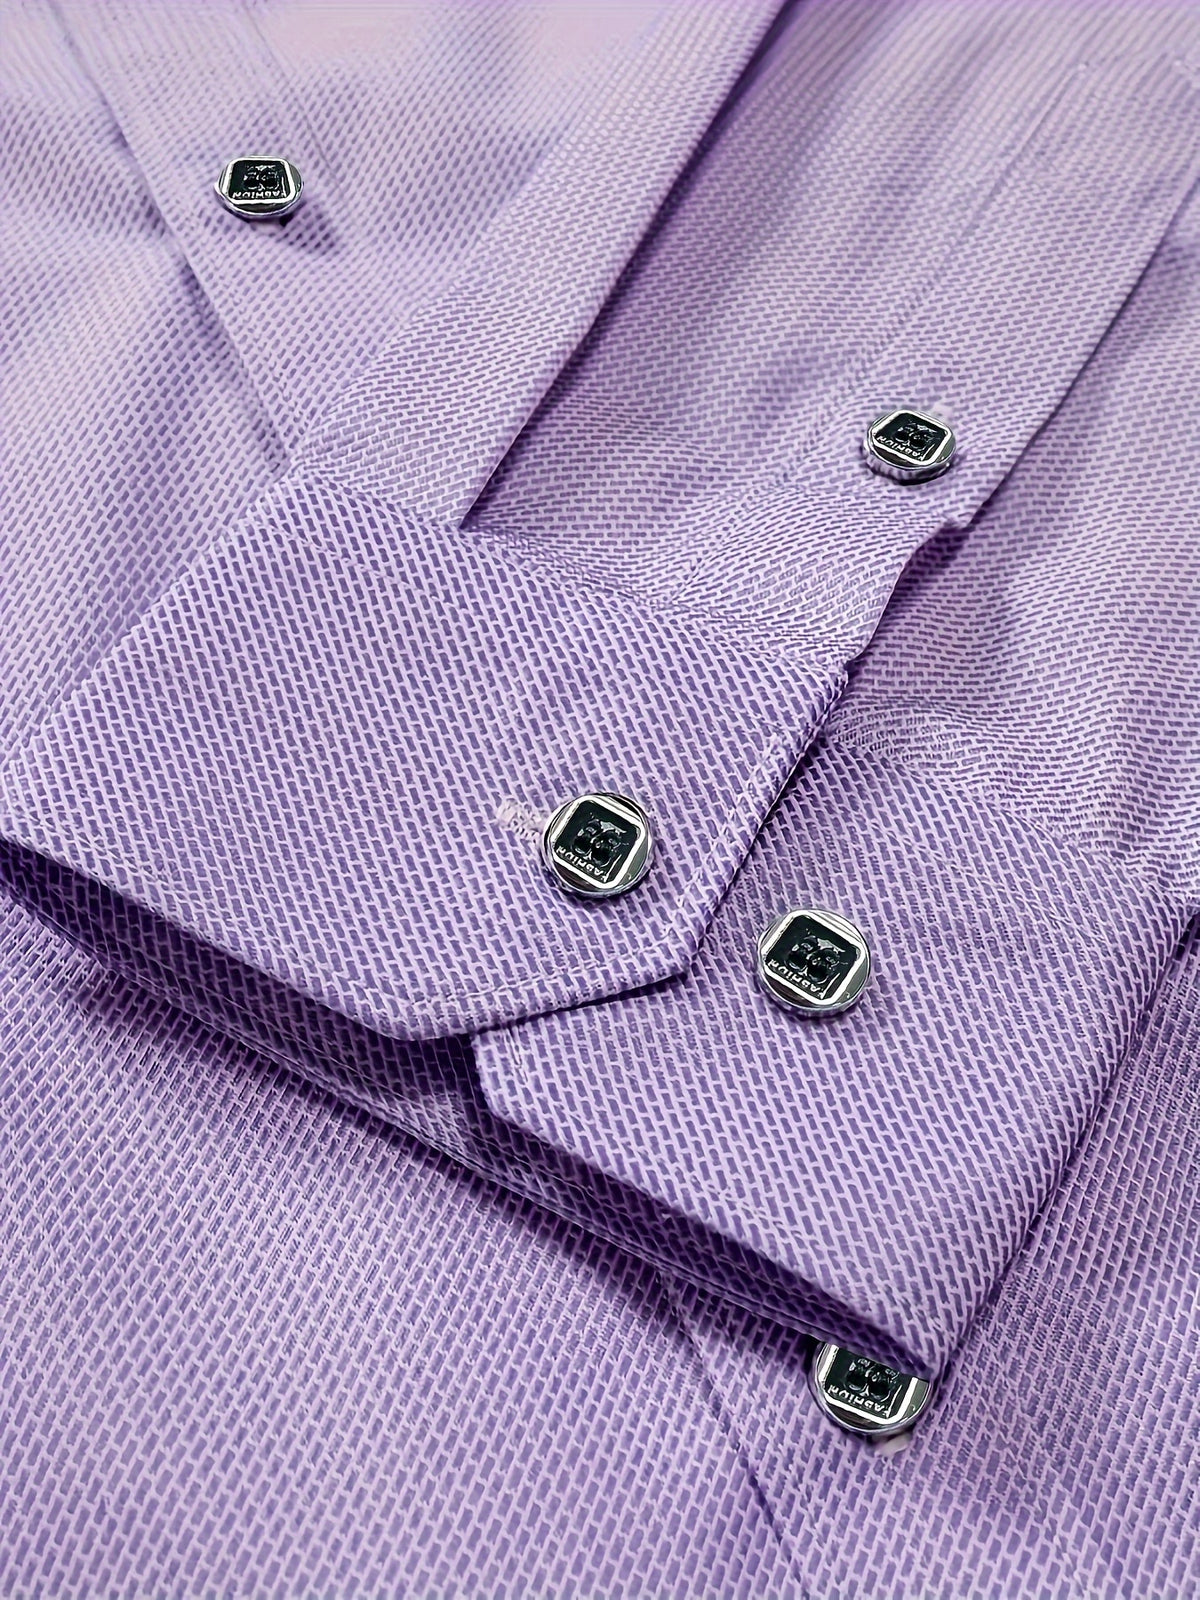 a close up of a purple dress shirt